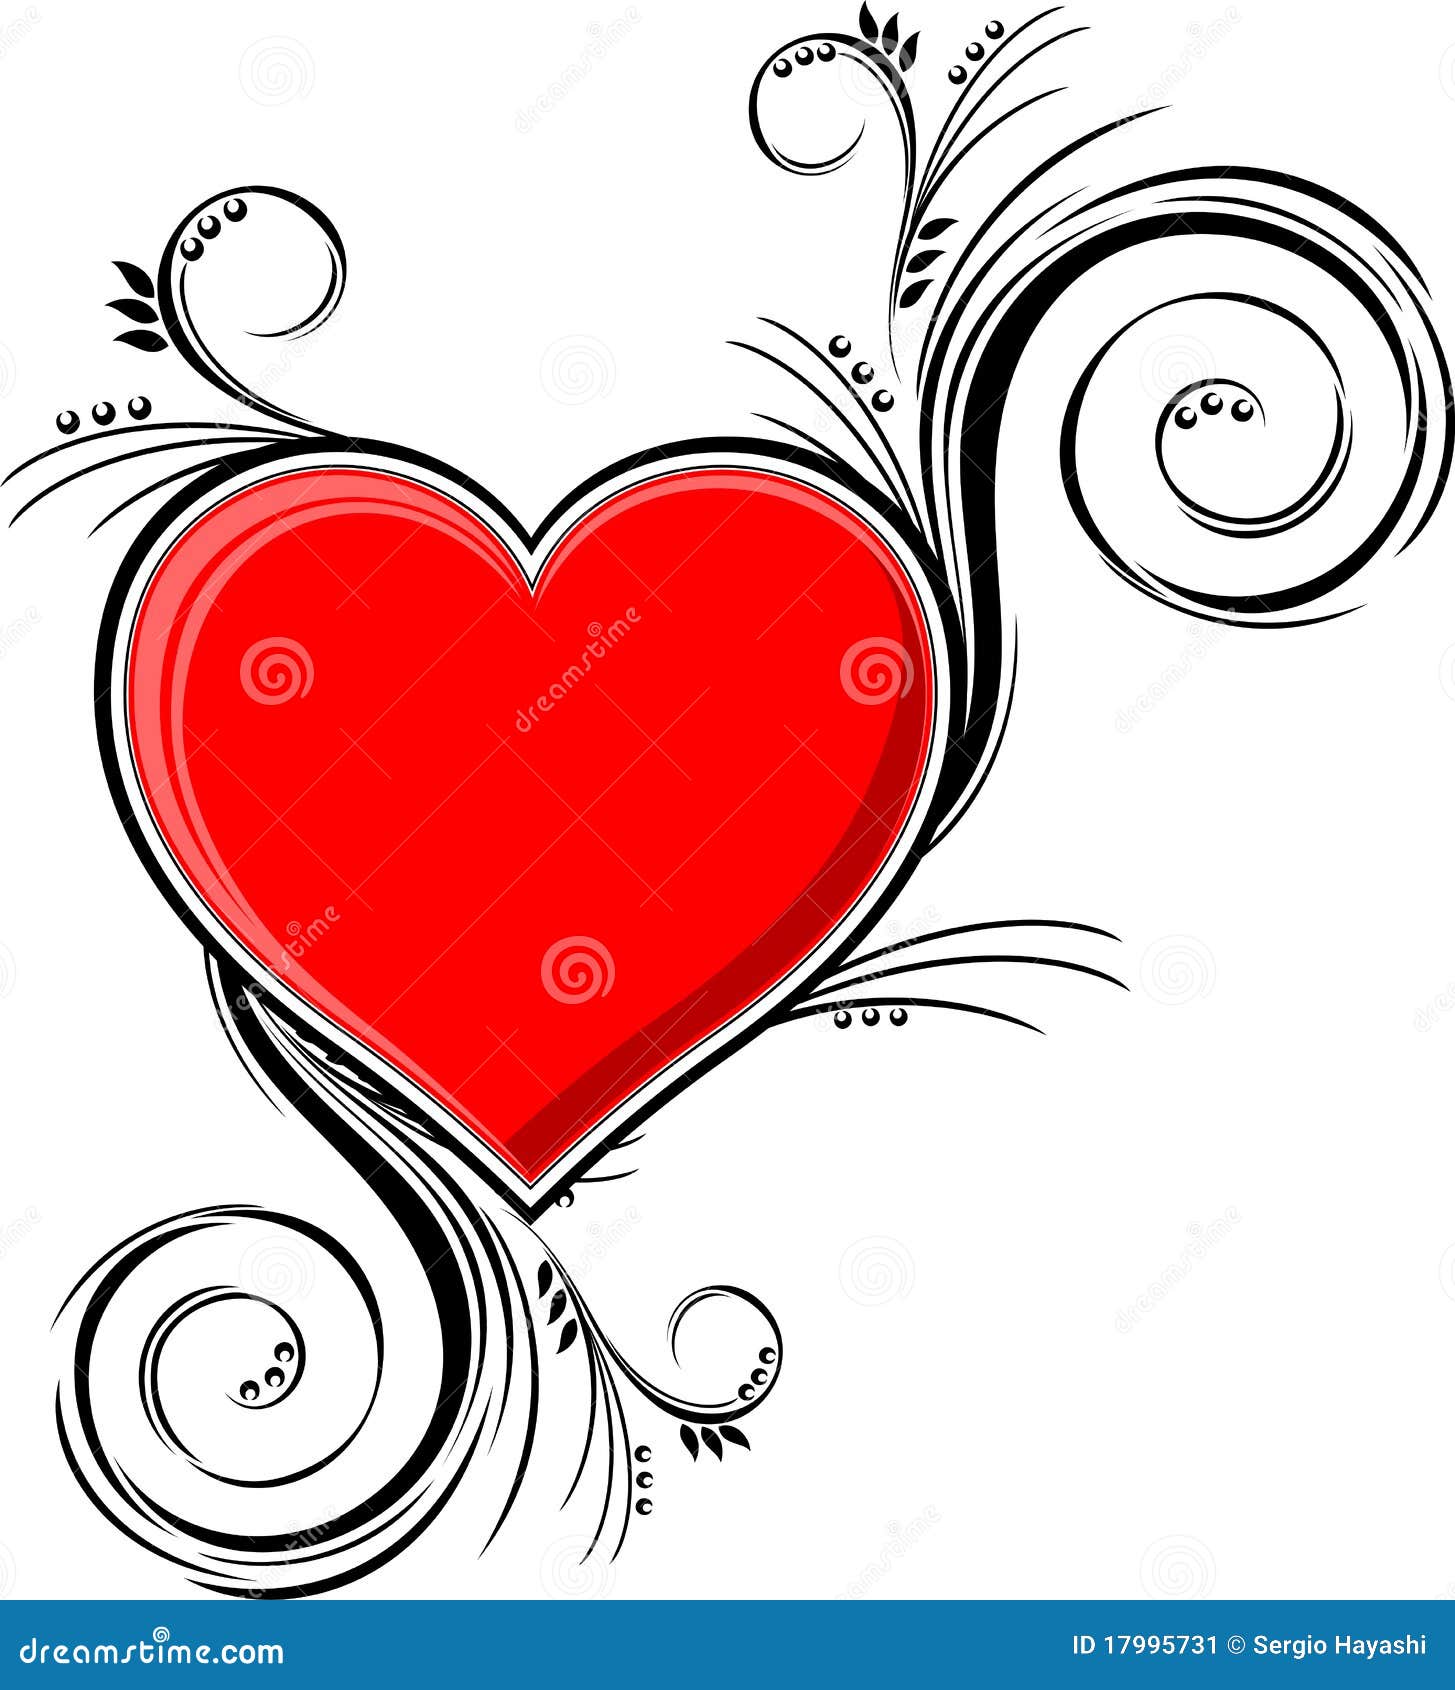 Heart ornaments stock vector. Illustration of creative - 17995731